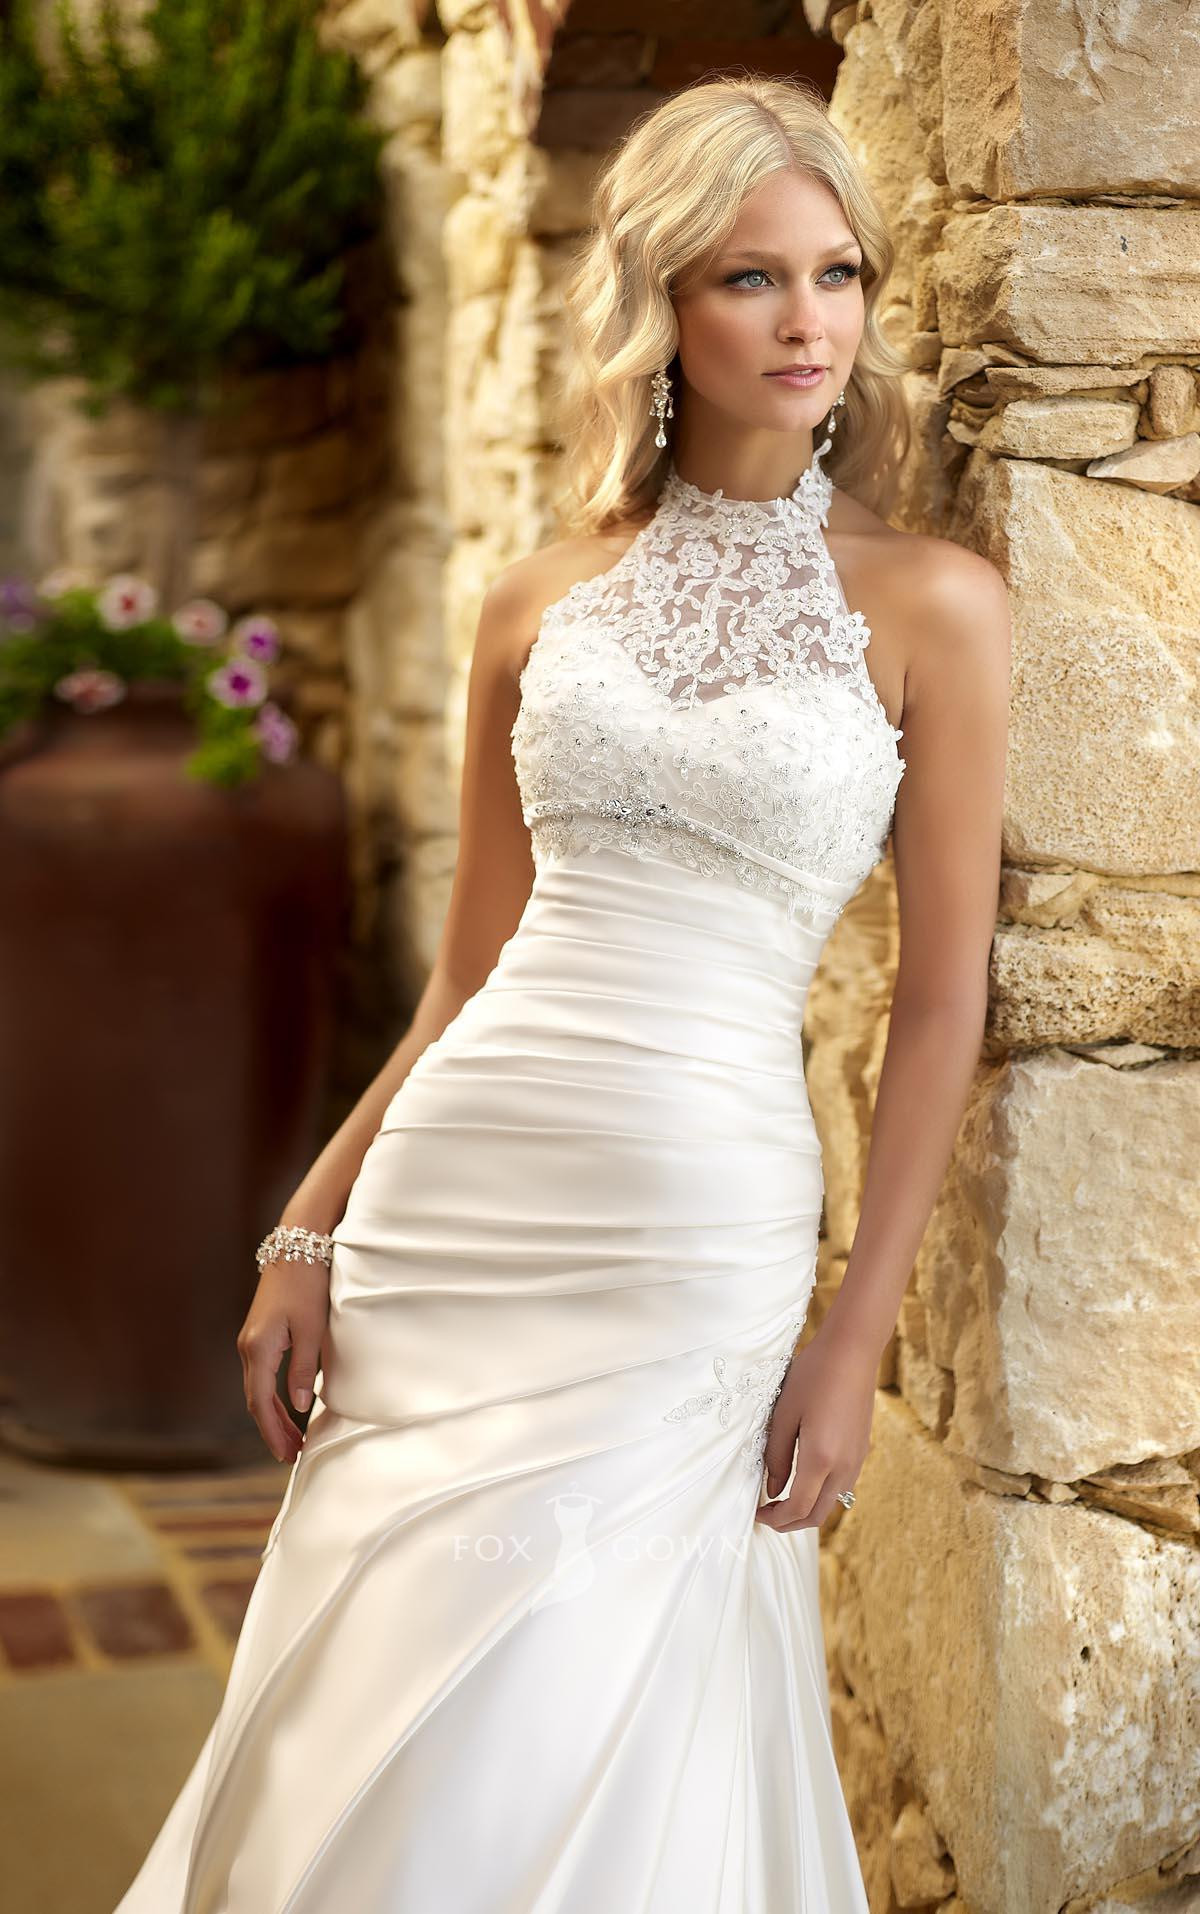 Wedding Gowns Lace
 Ten Beautiful Lace Wedding Dresses – BestBride101